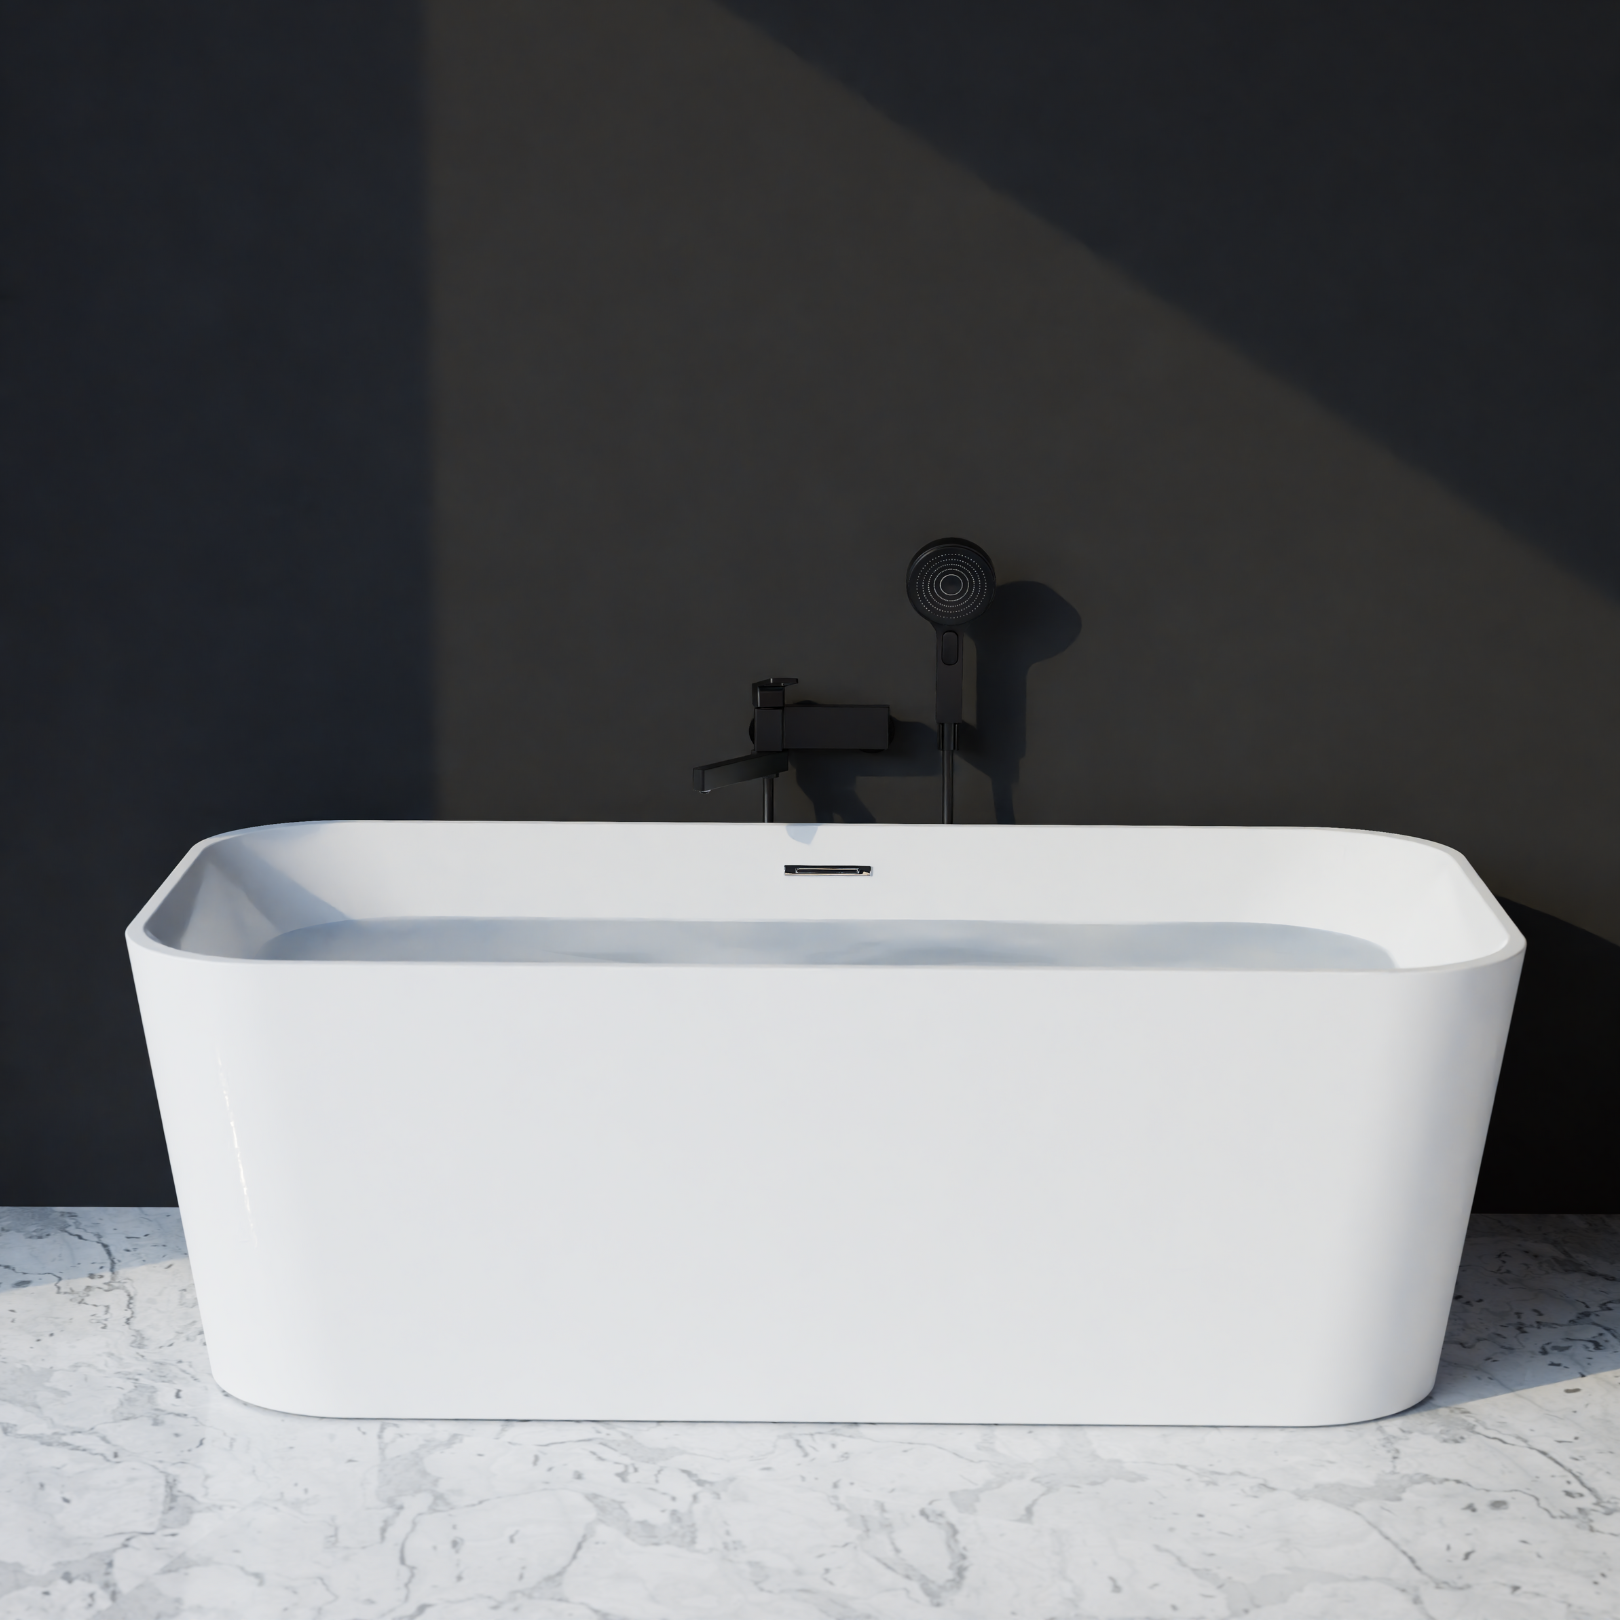 Zion 67" x 31" Freestanding Acrylic Soaker Tub, White, ZION67